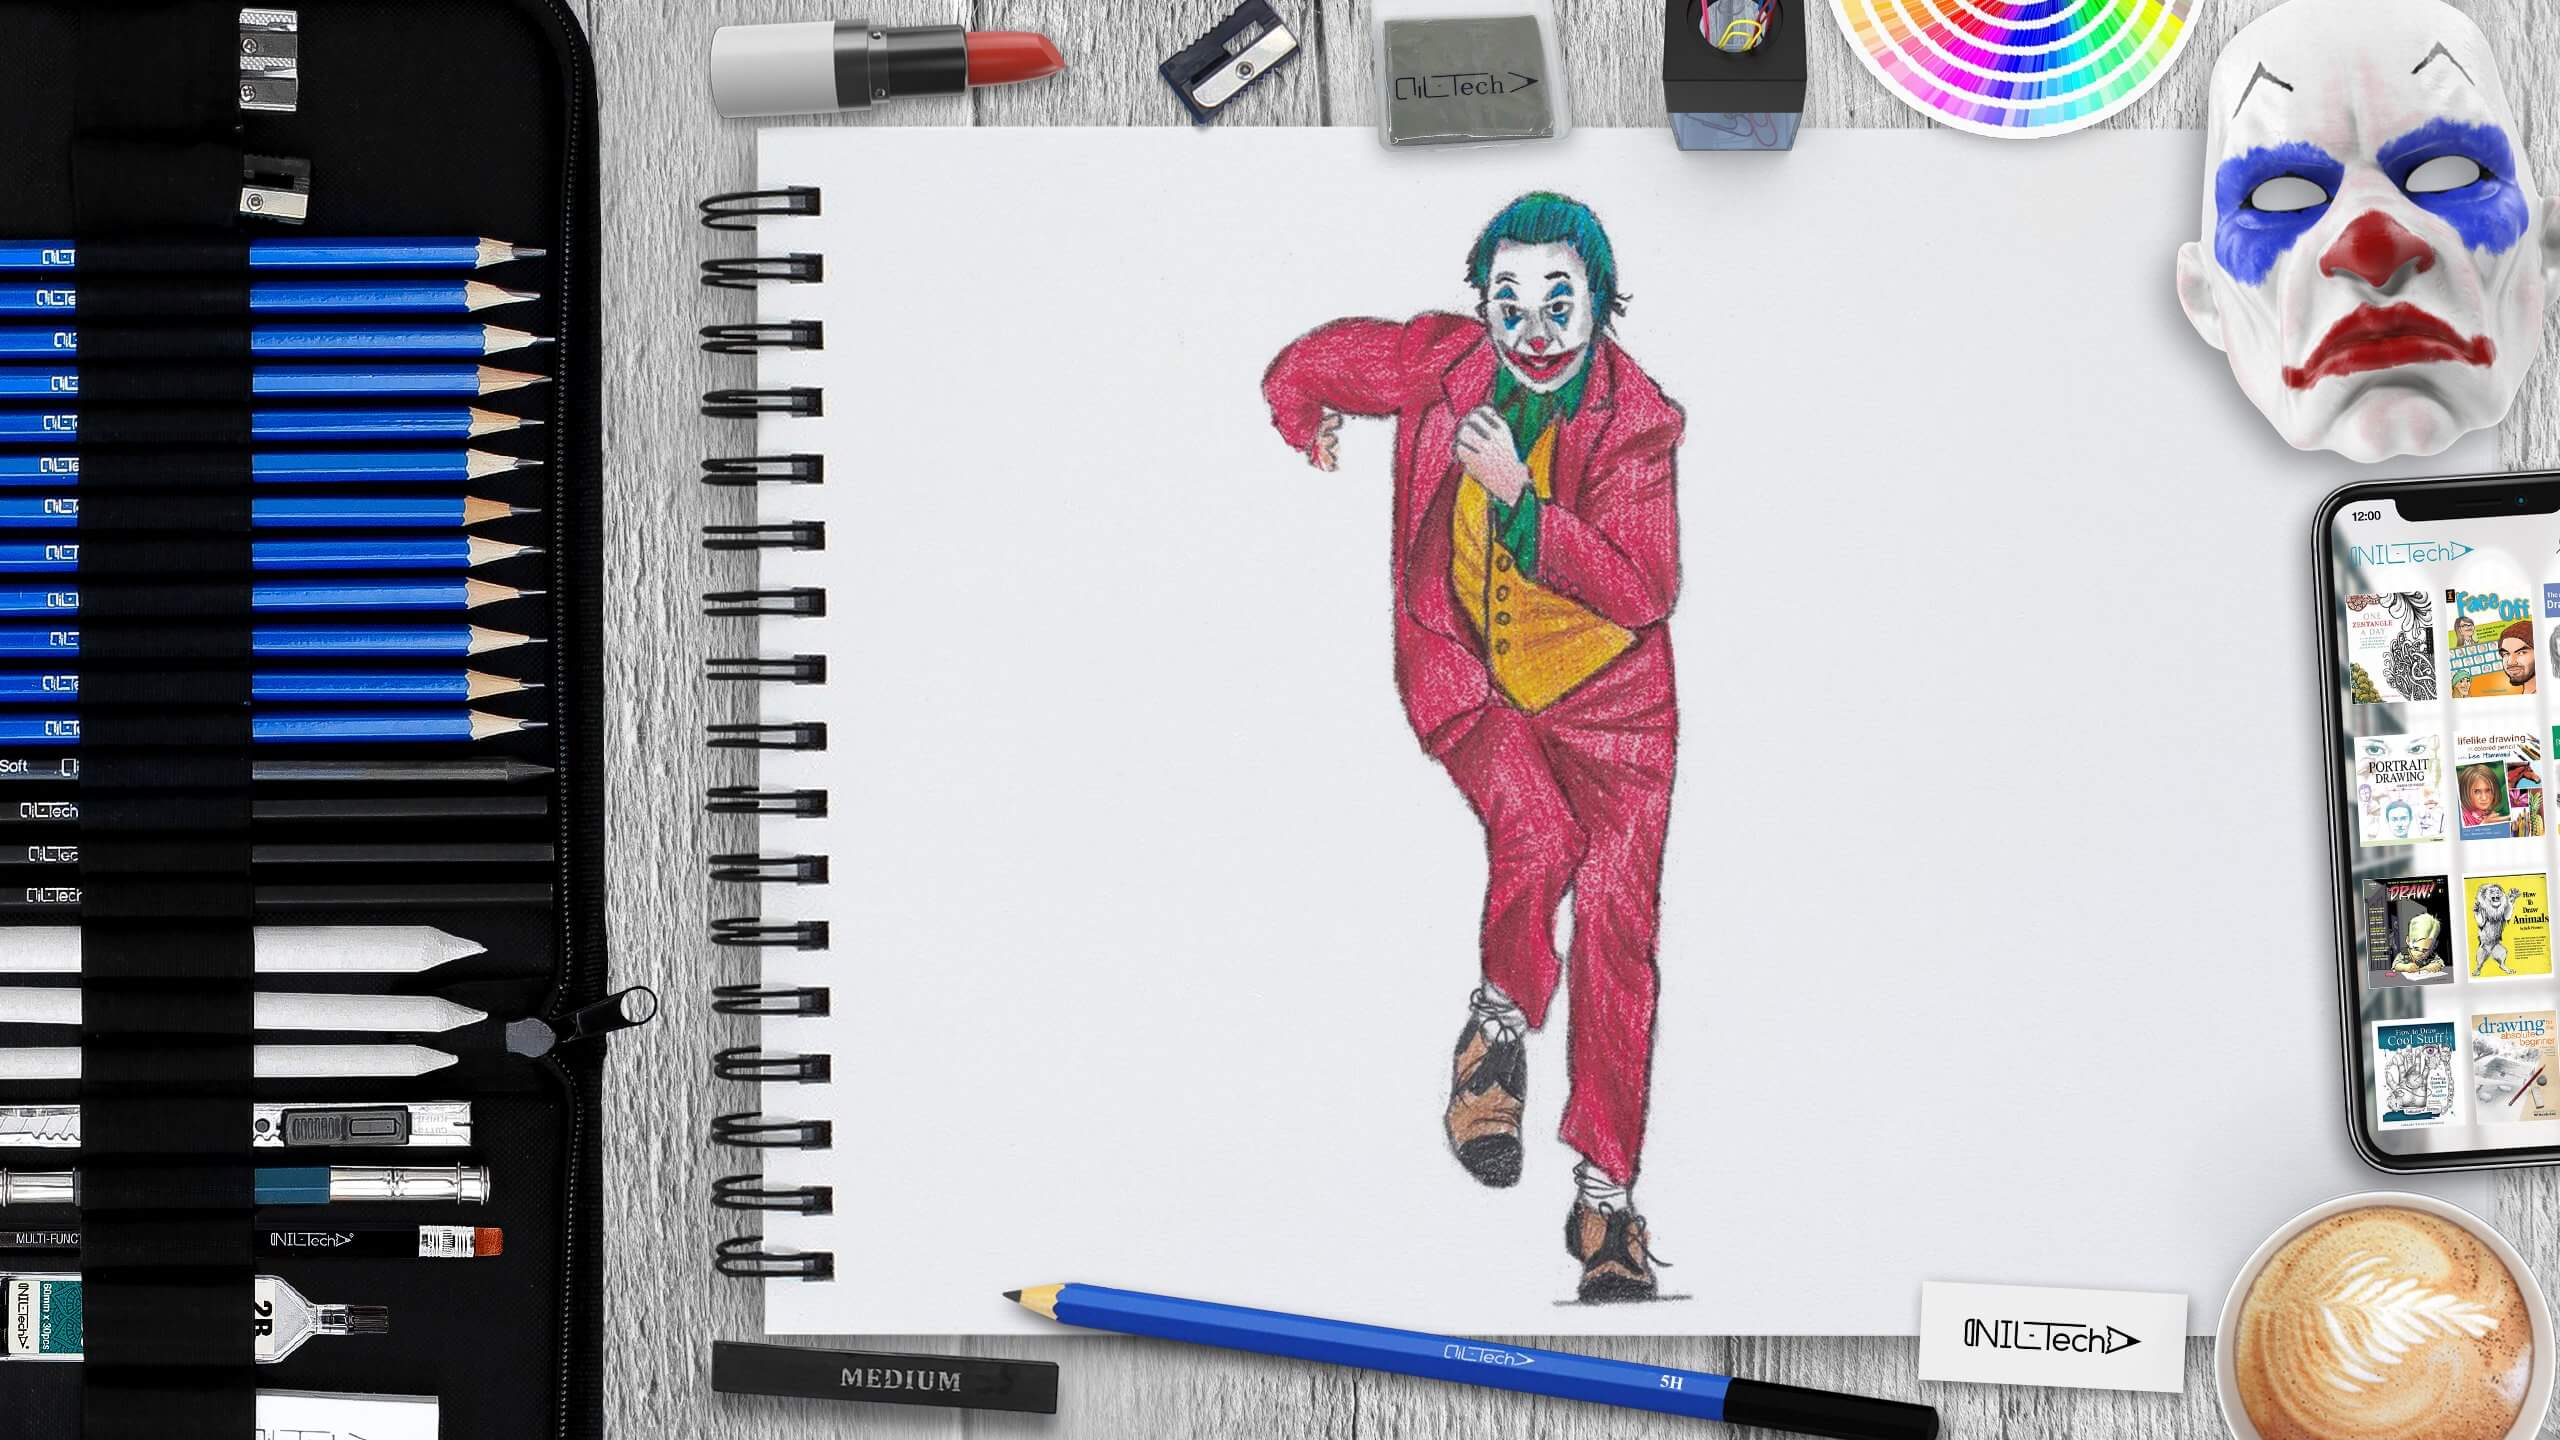 How to Draw Joker